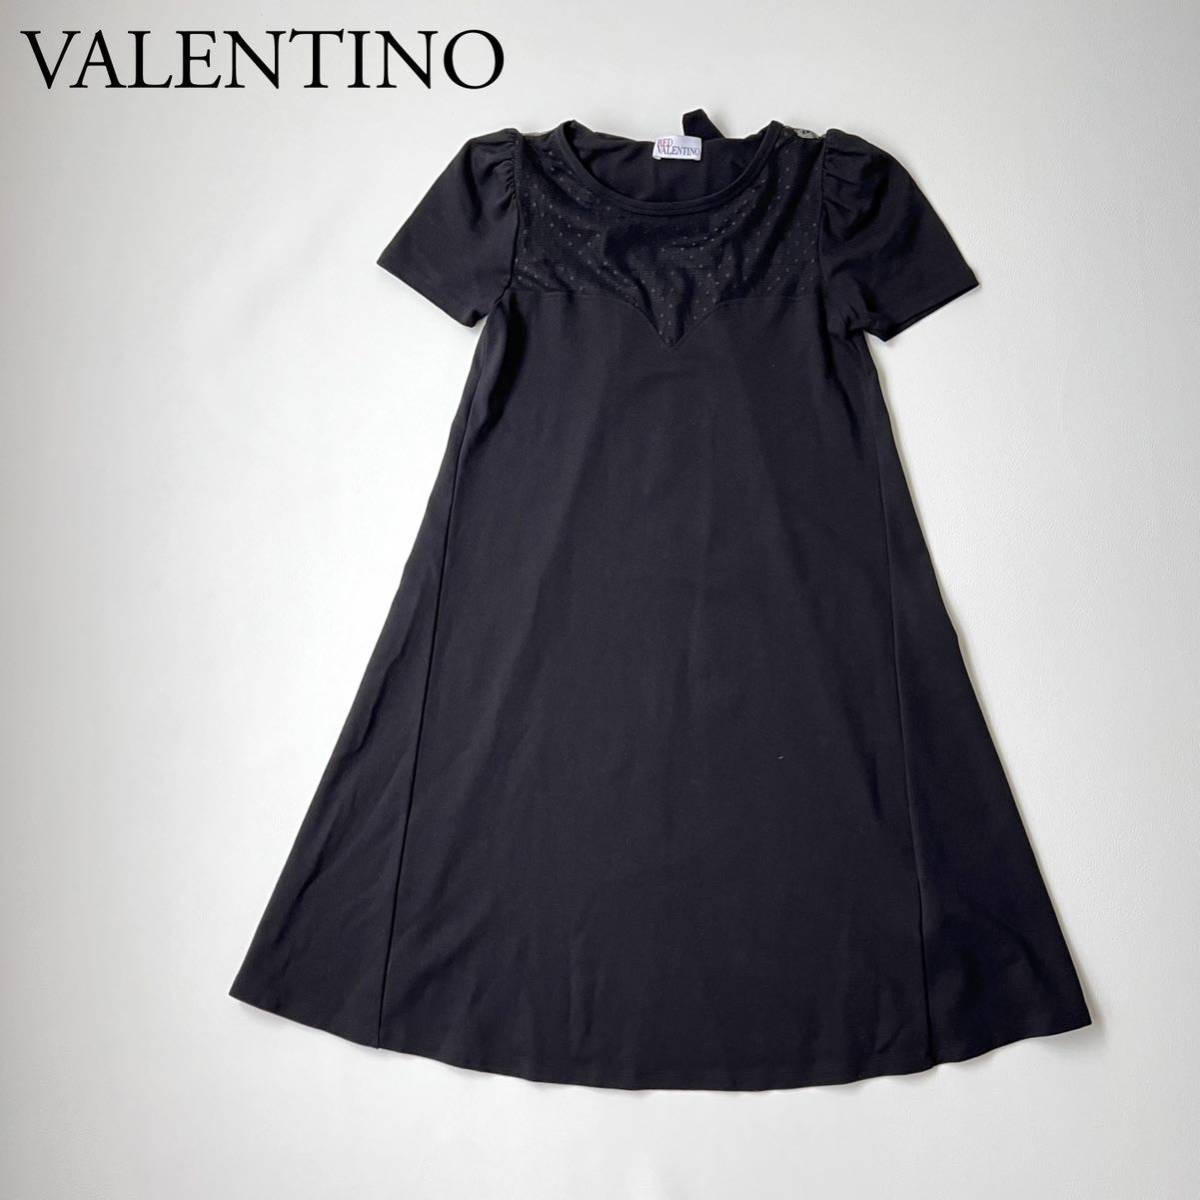 RED VALENTINO レッドヴァレンティノ フレアワンピース ドレス